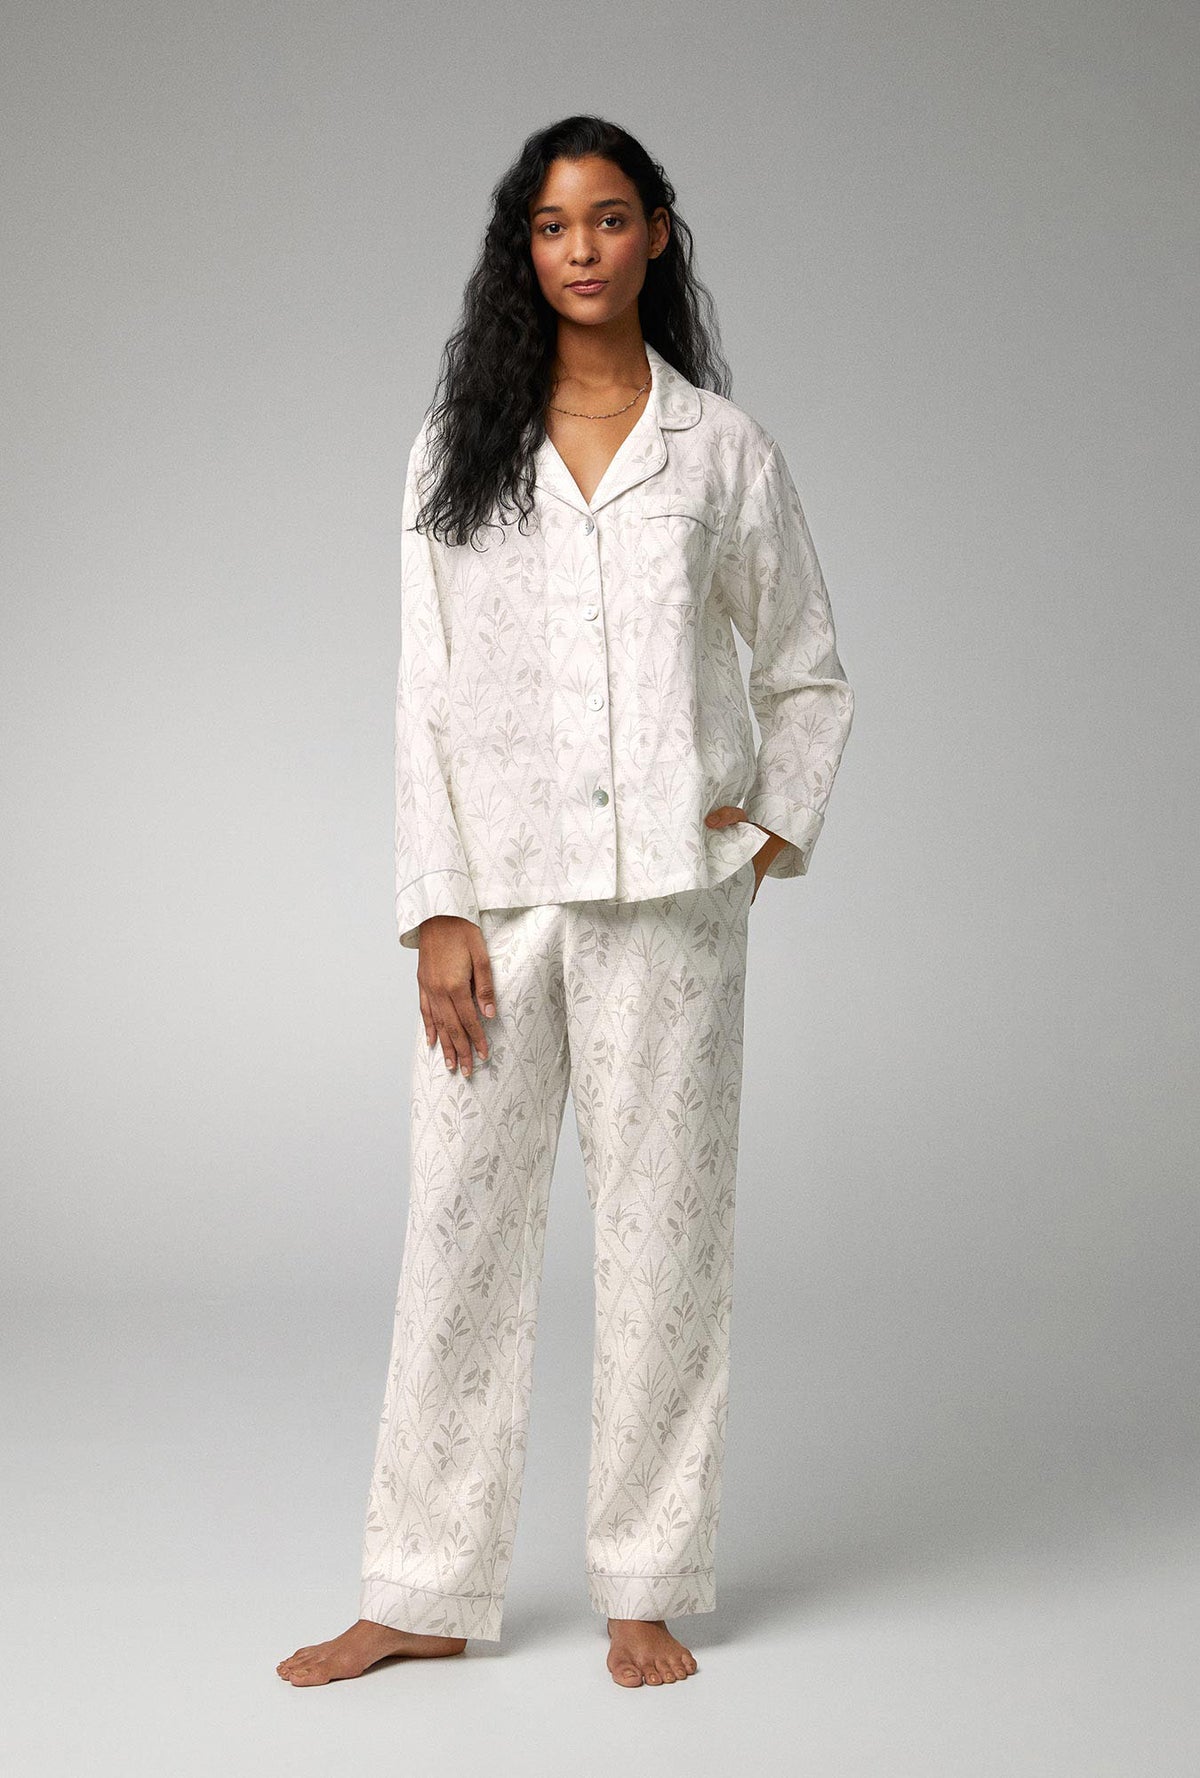 Botanical Studies Long Sleeve Classic Woven Linen PJ Set - Bedhead Pajamas